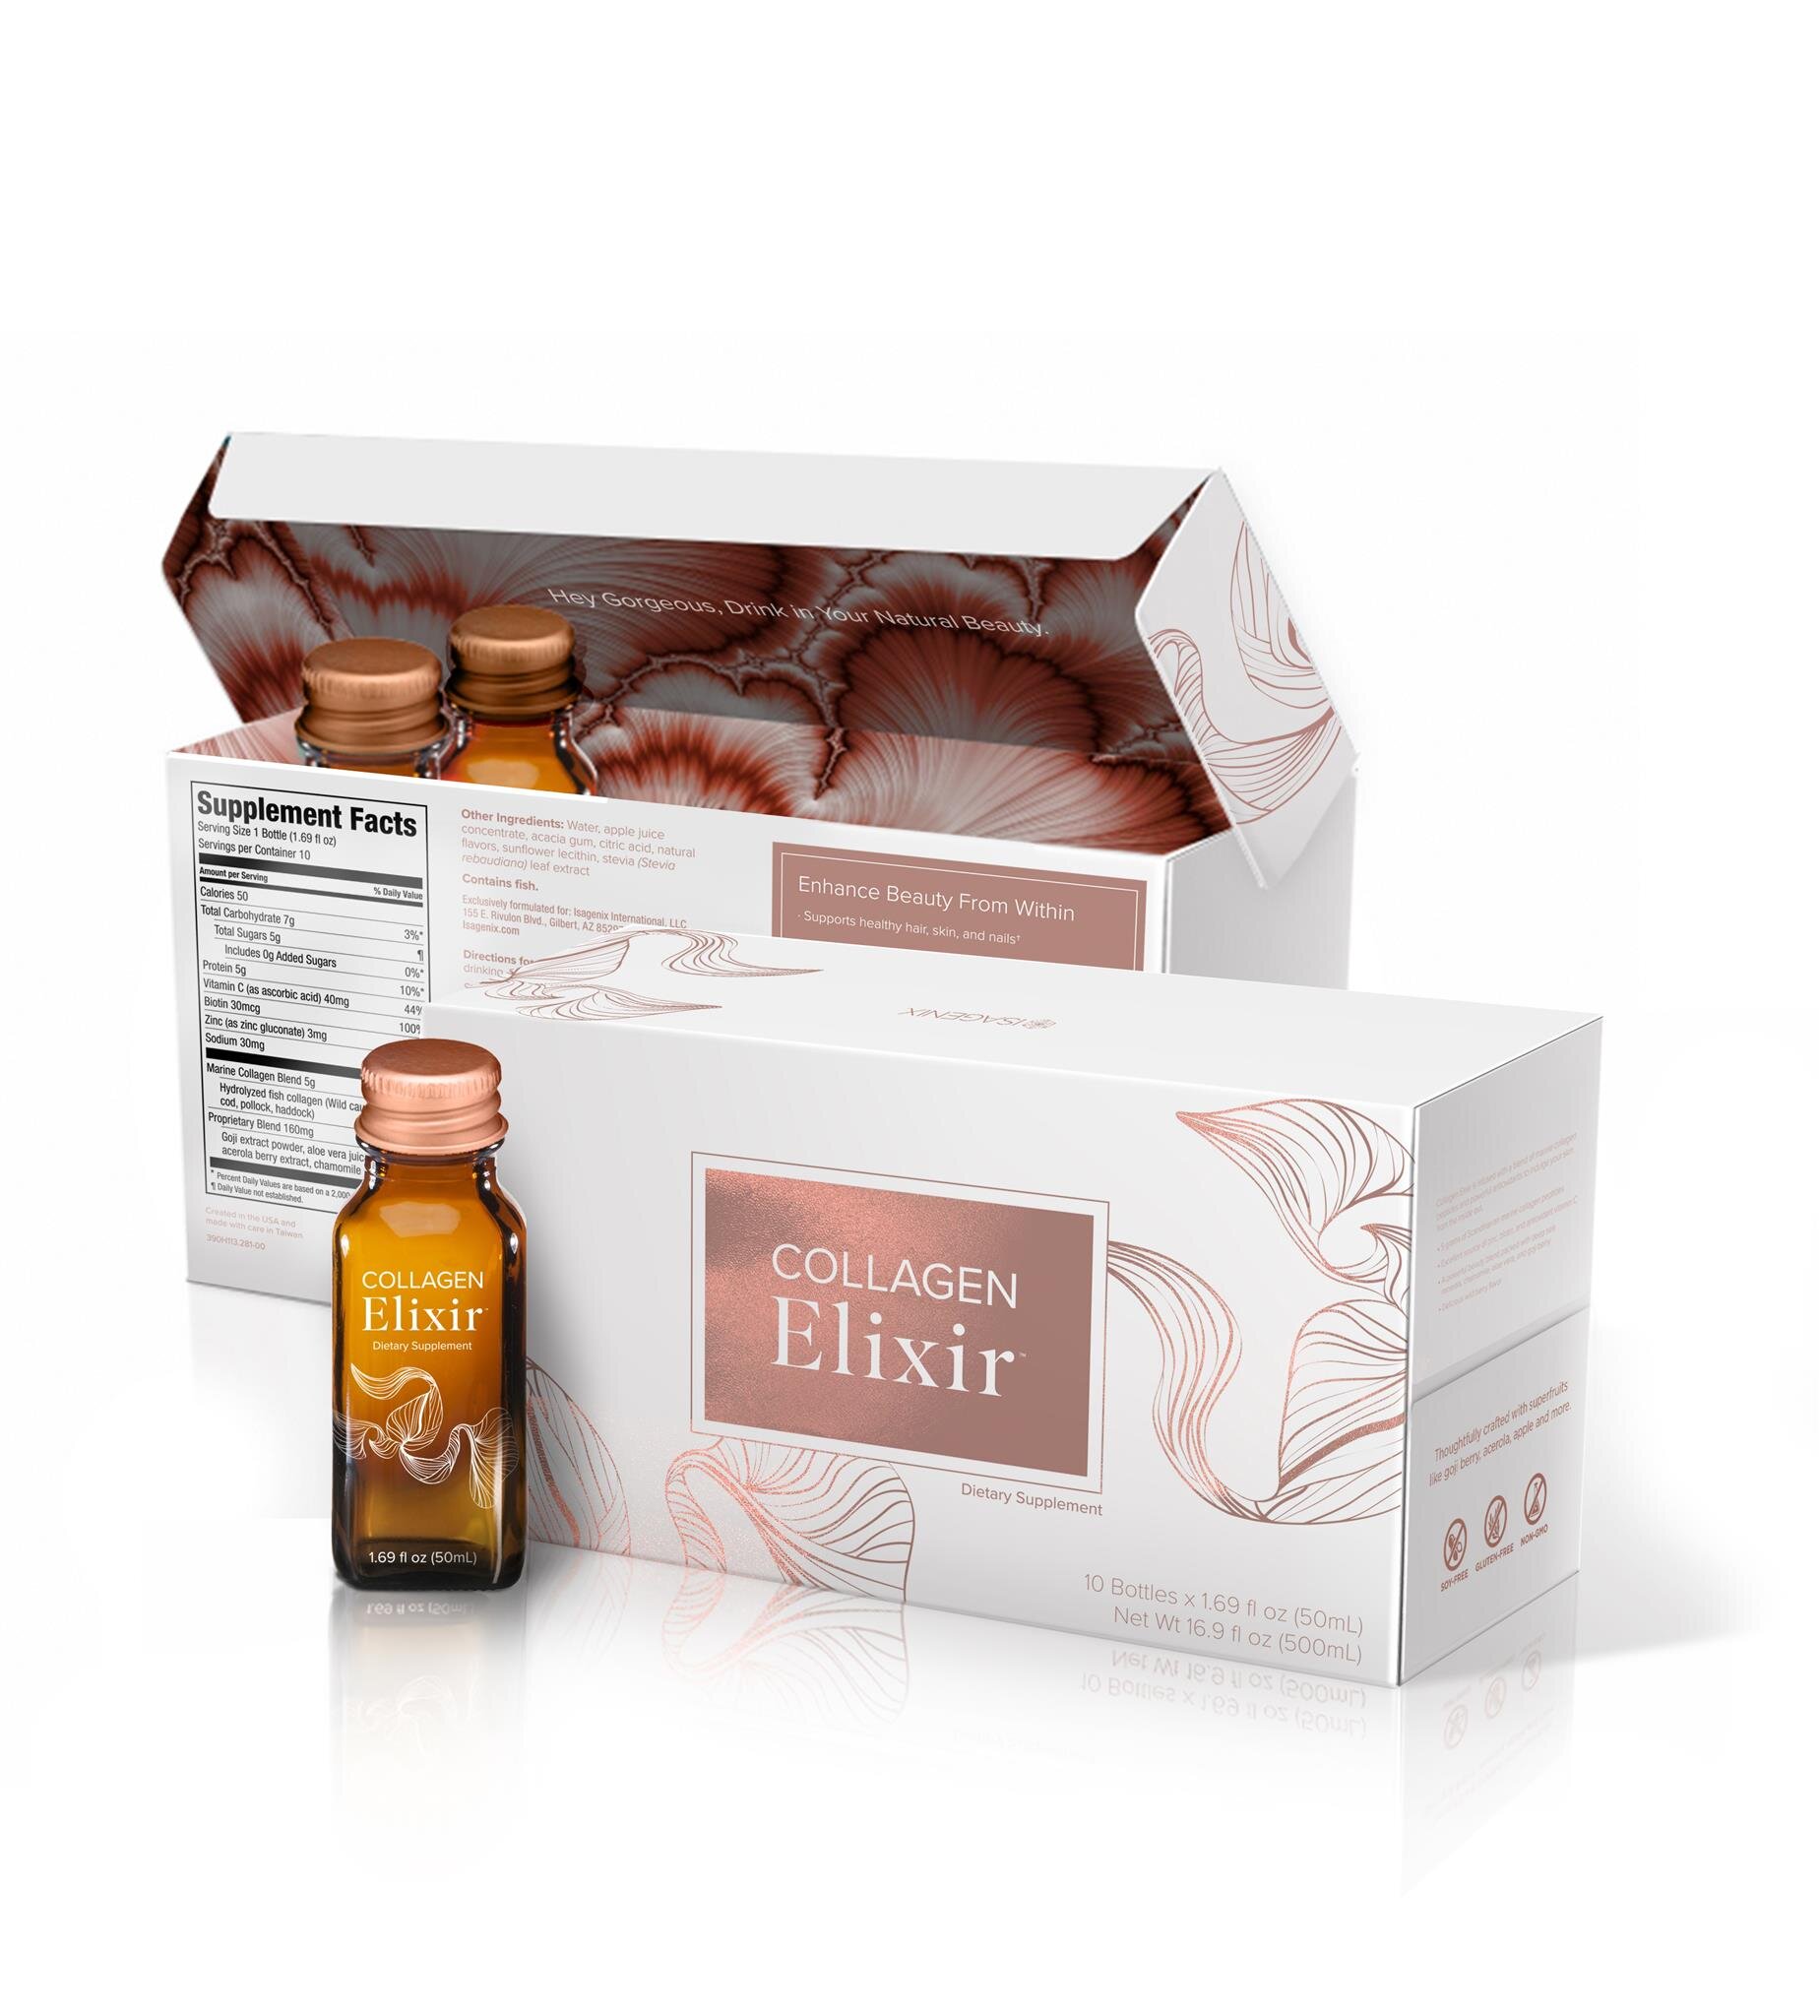 Collagen Elixir Packaging.jpg